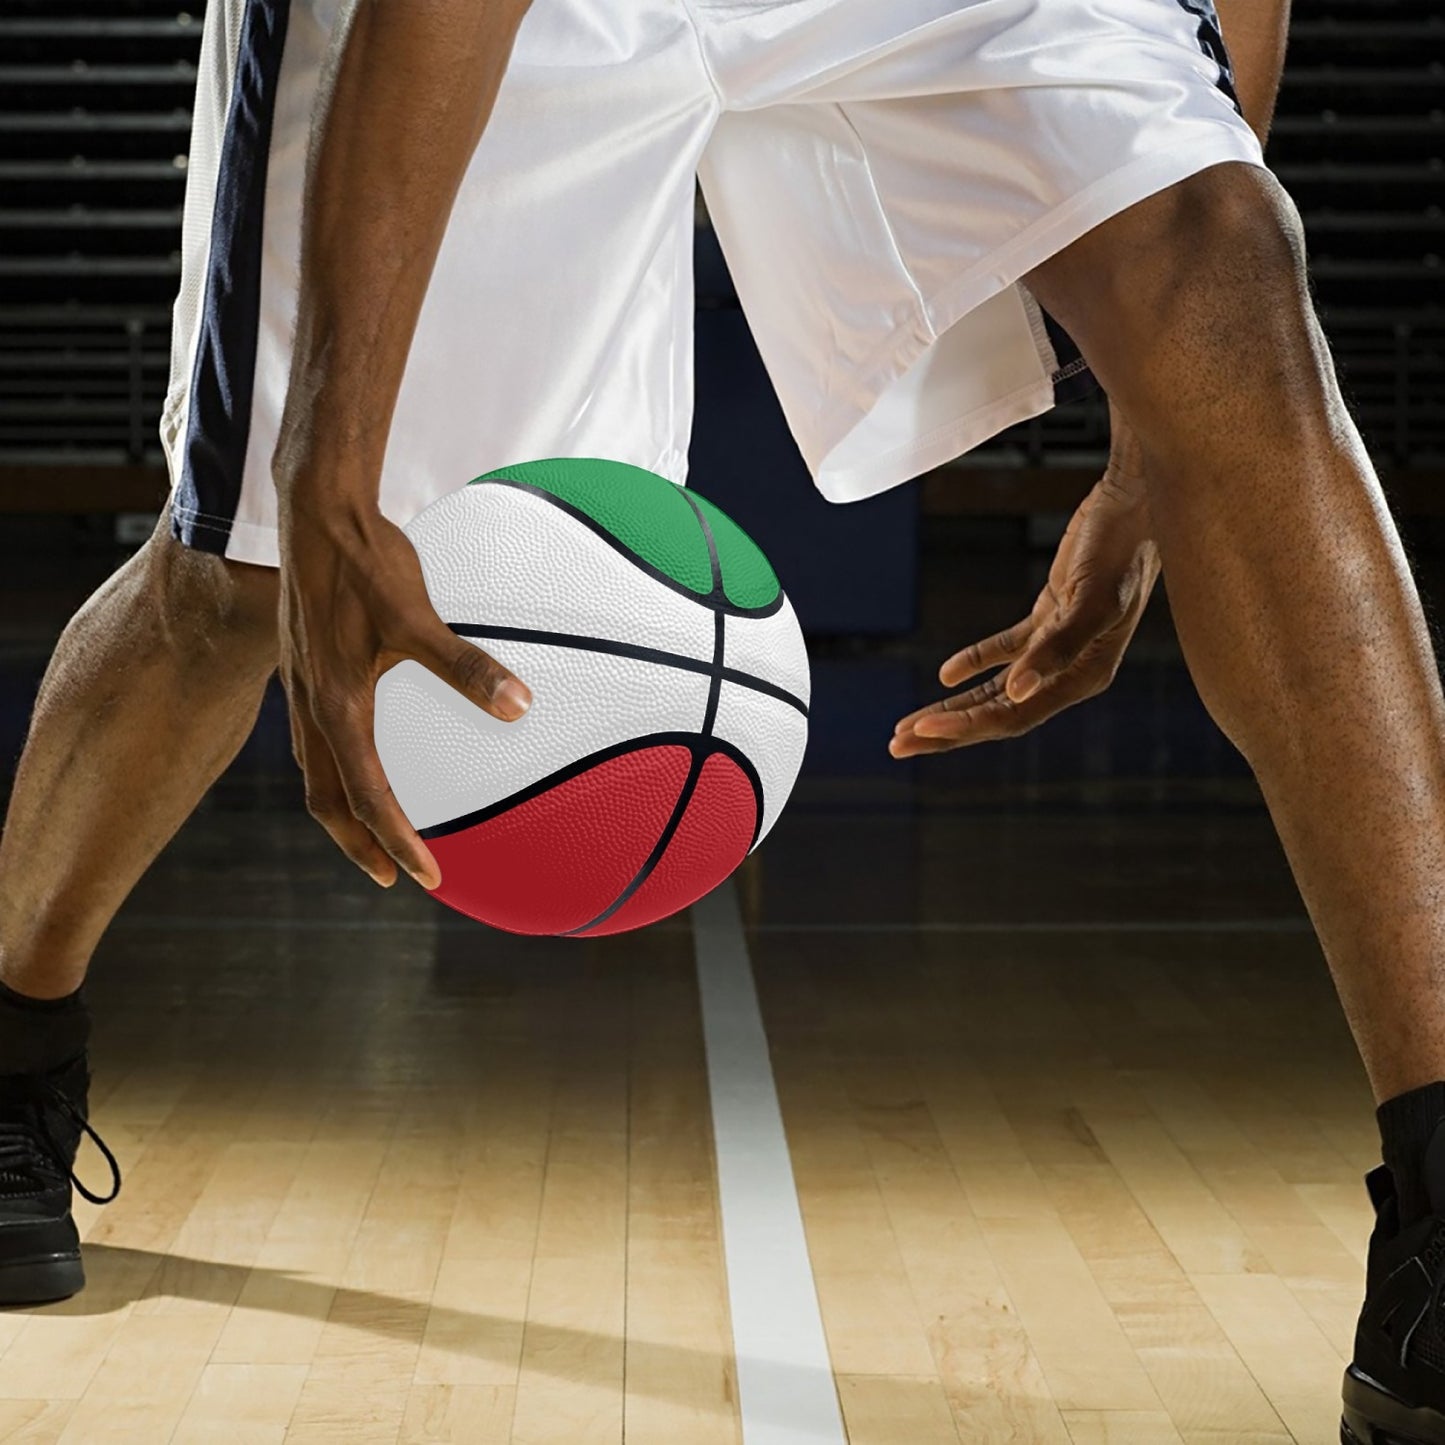 Italy Basketball